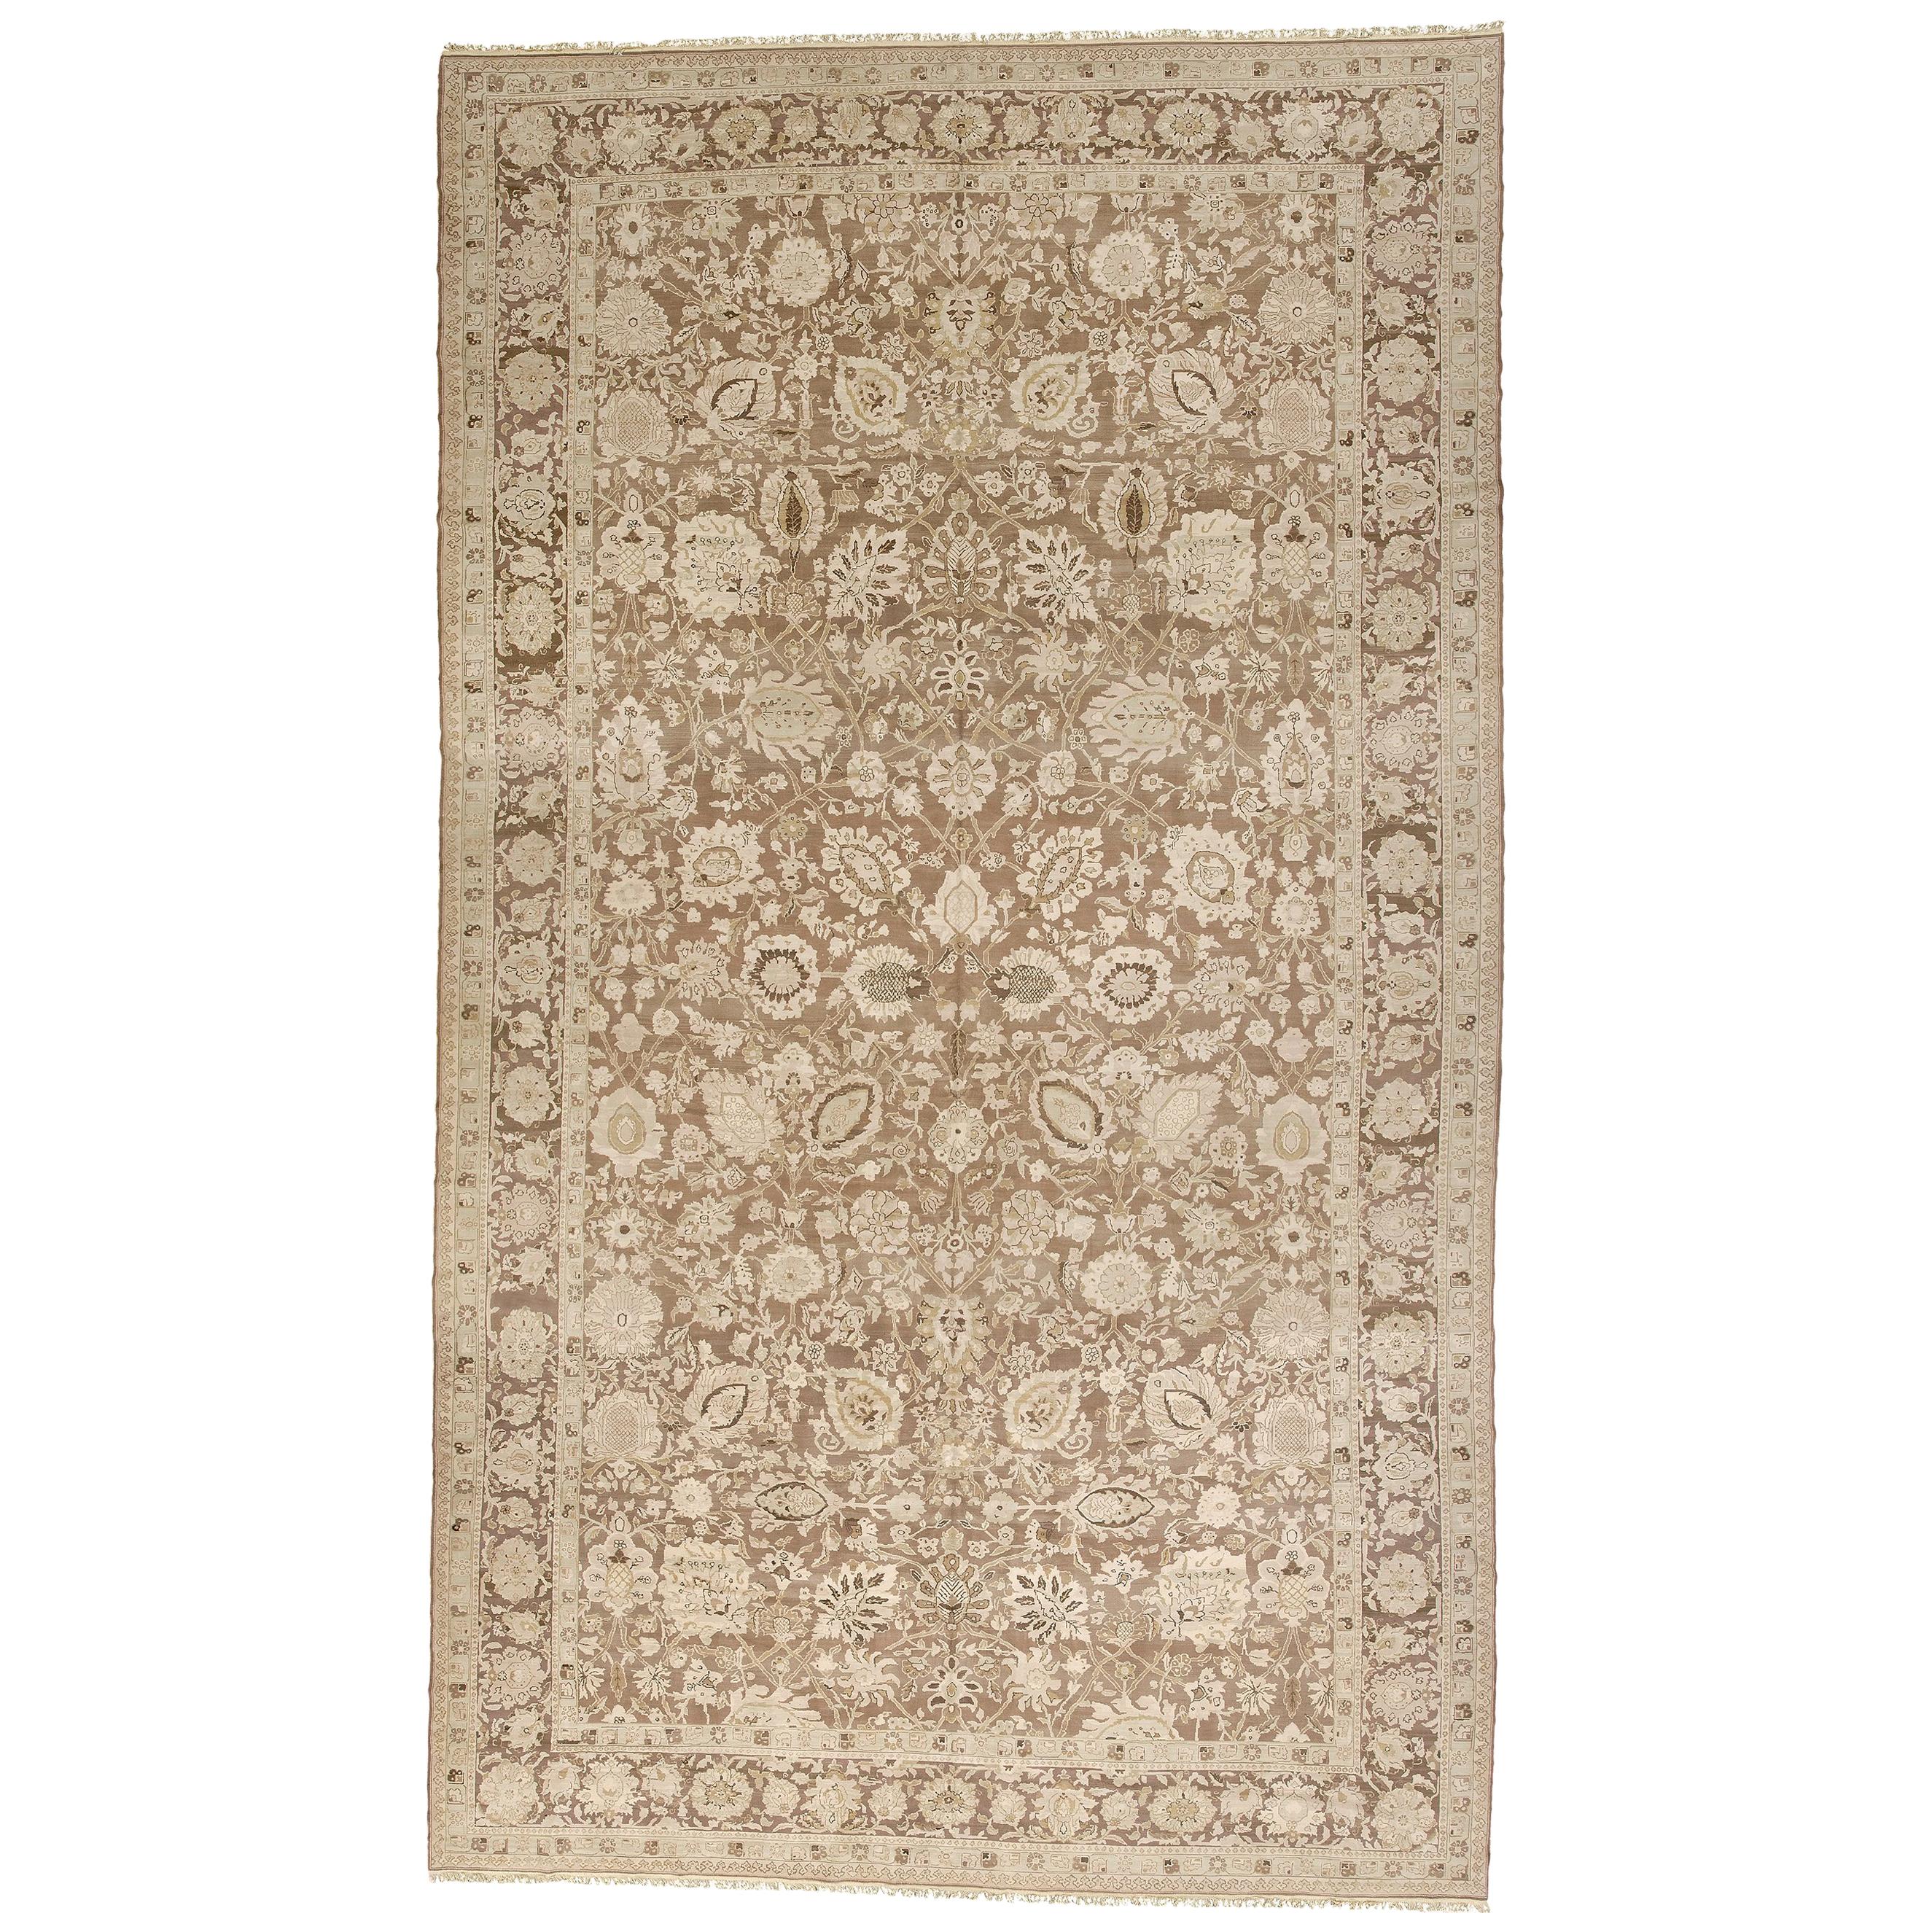 Contemporary 'Shah Abus' Handwoven Carpet